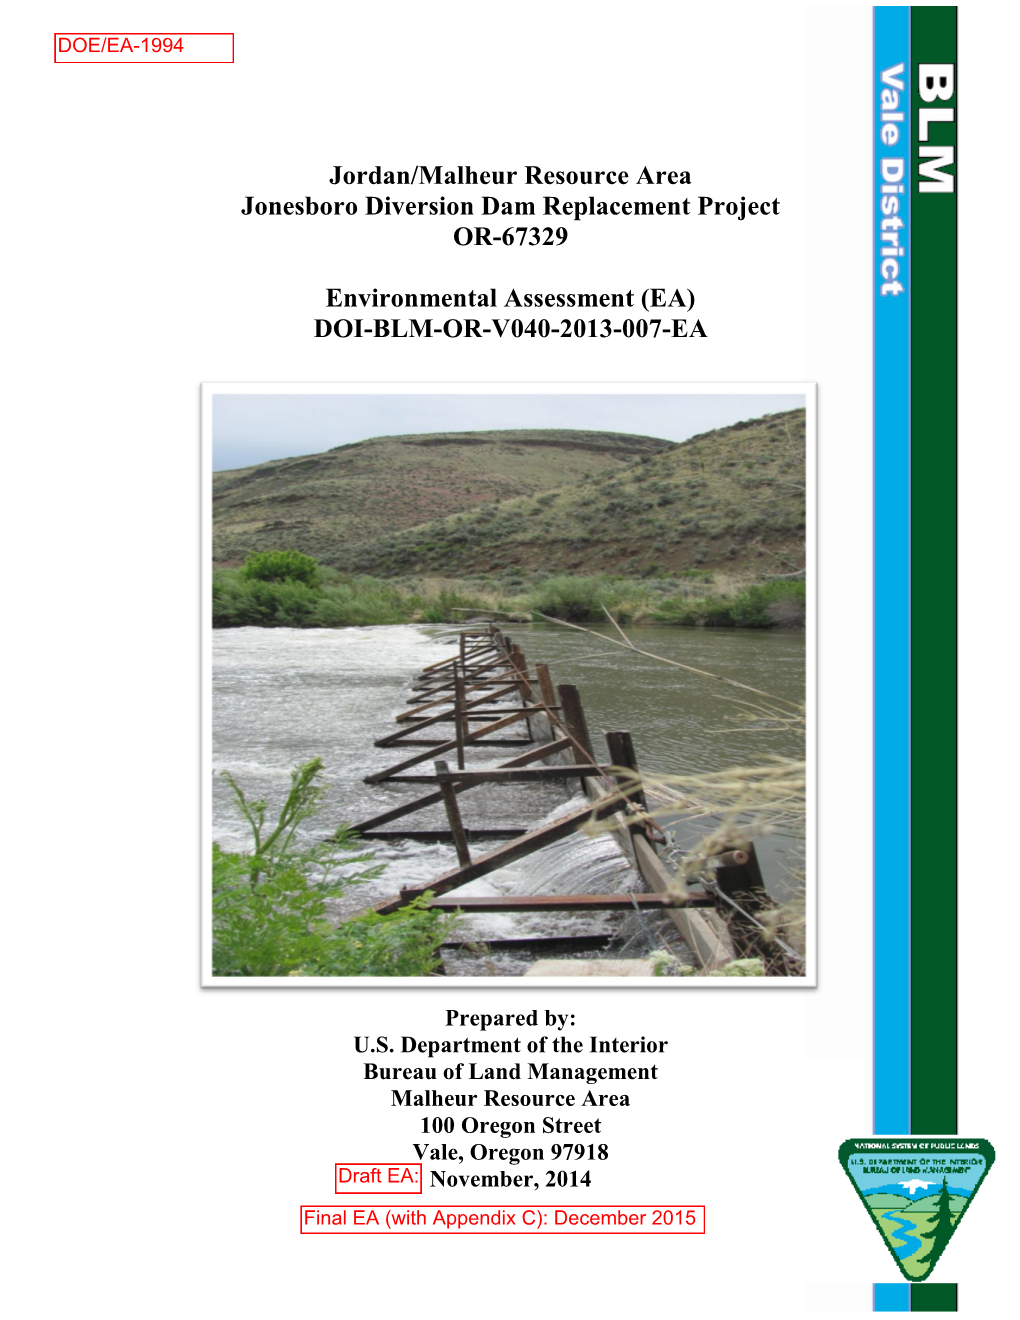 Jonesboro Diversion Dam Replacement Project OR-67329